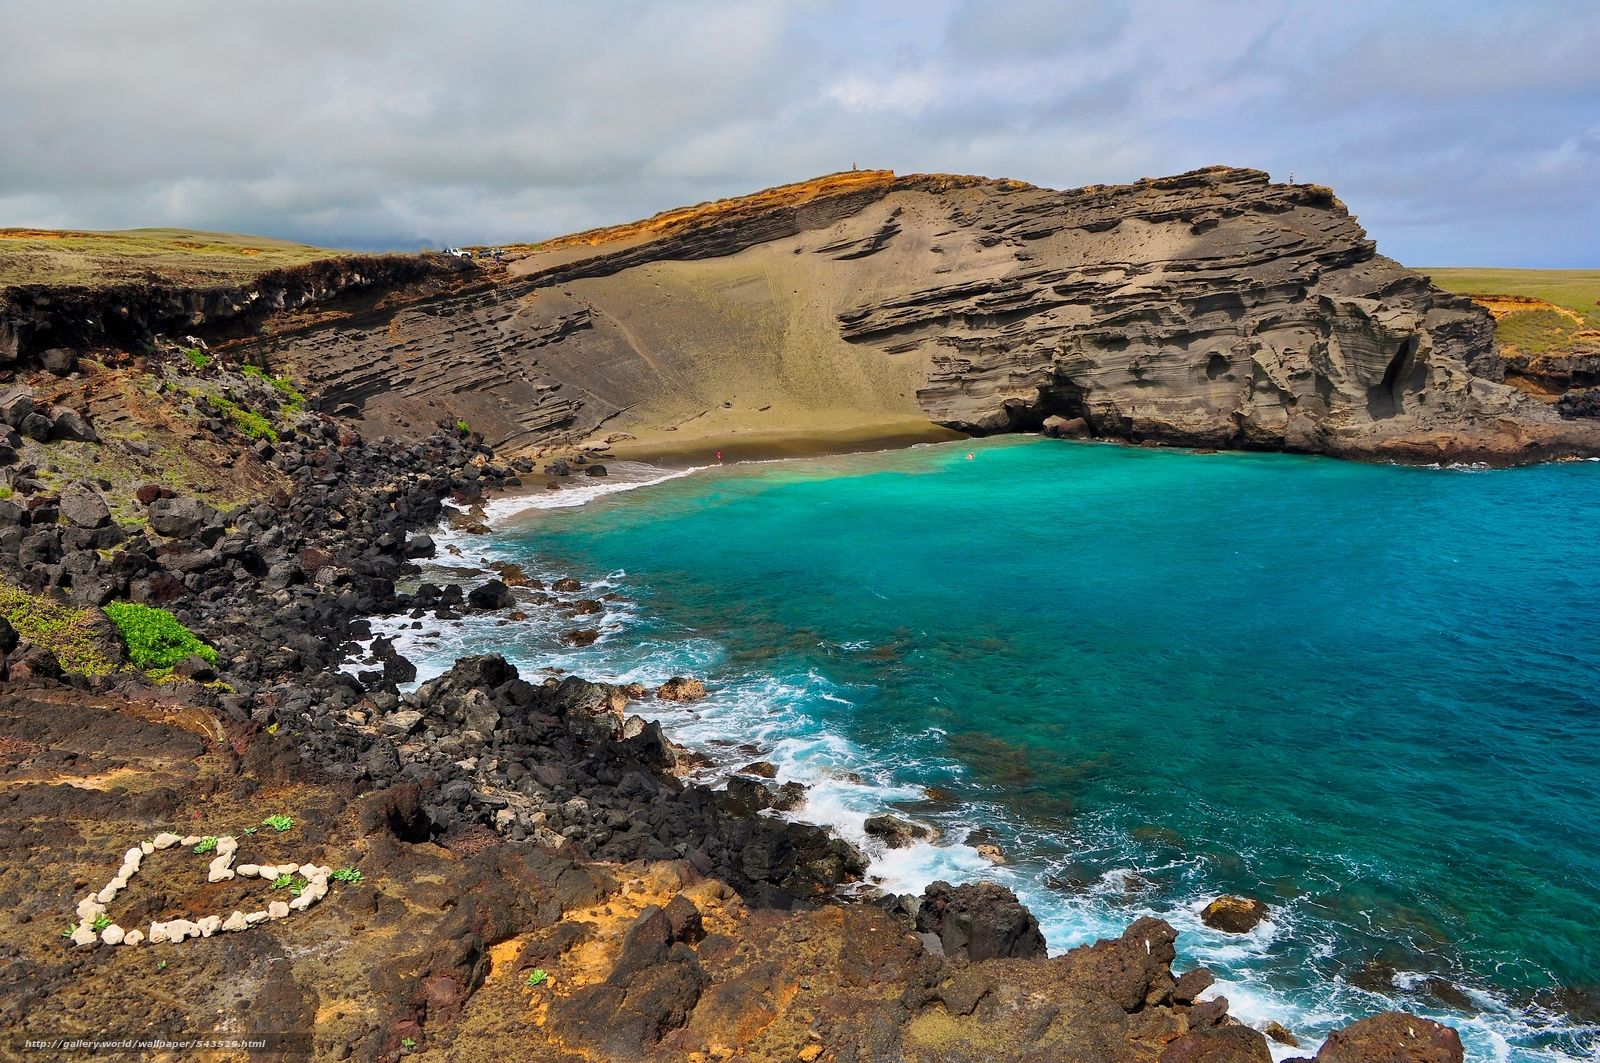 Download wallpaper Green Sand Beach, The Big Island, Hawaii. free desktop wallpaper in the resolution 4288x2848